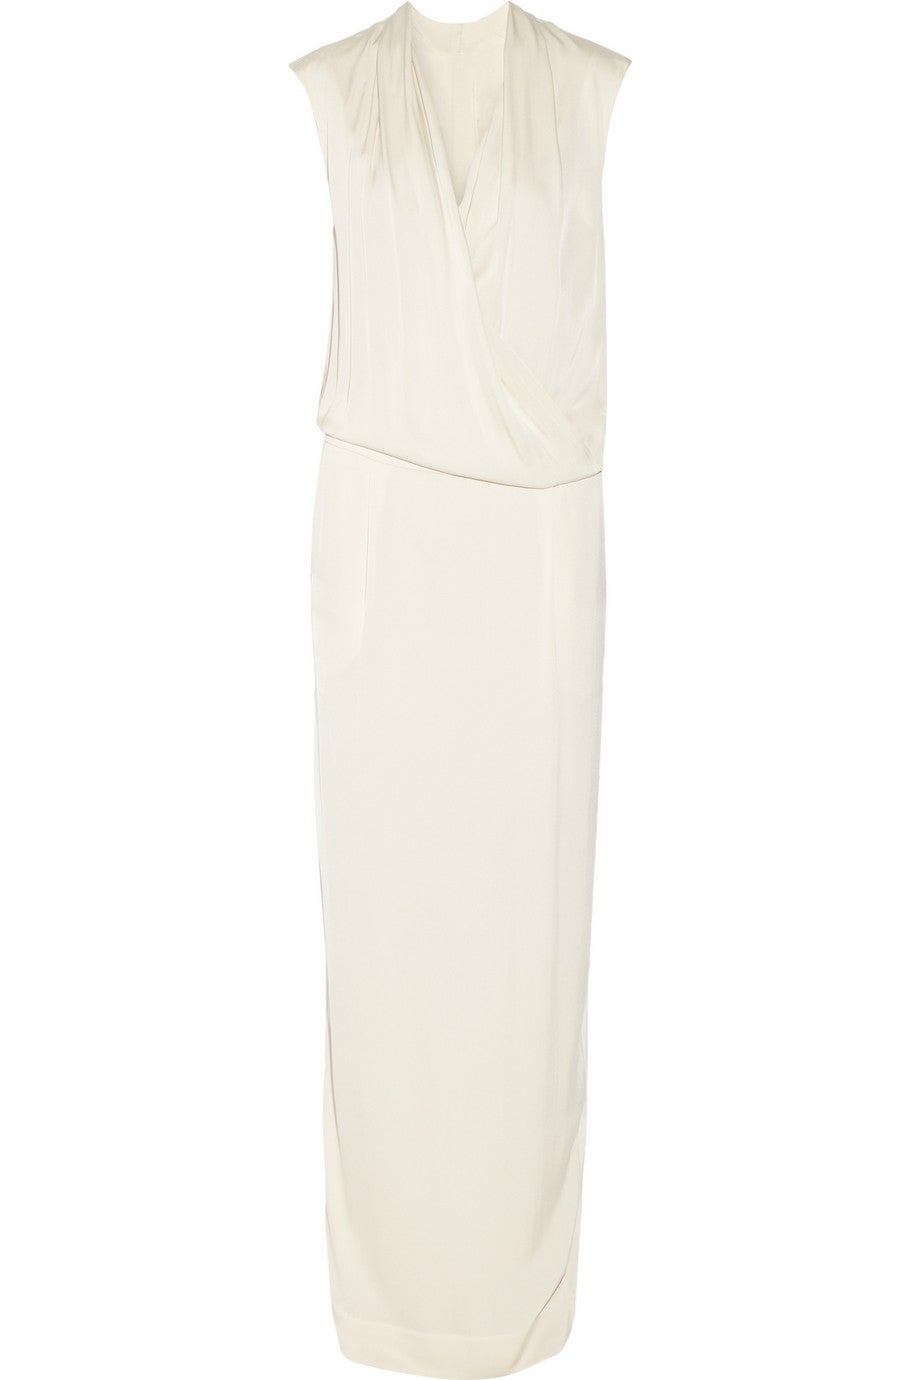 Best Retro Wedding Dresses For Solange | Essence